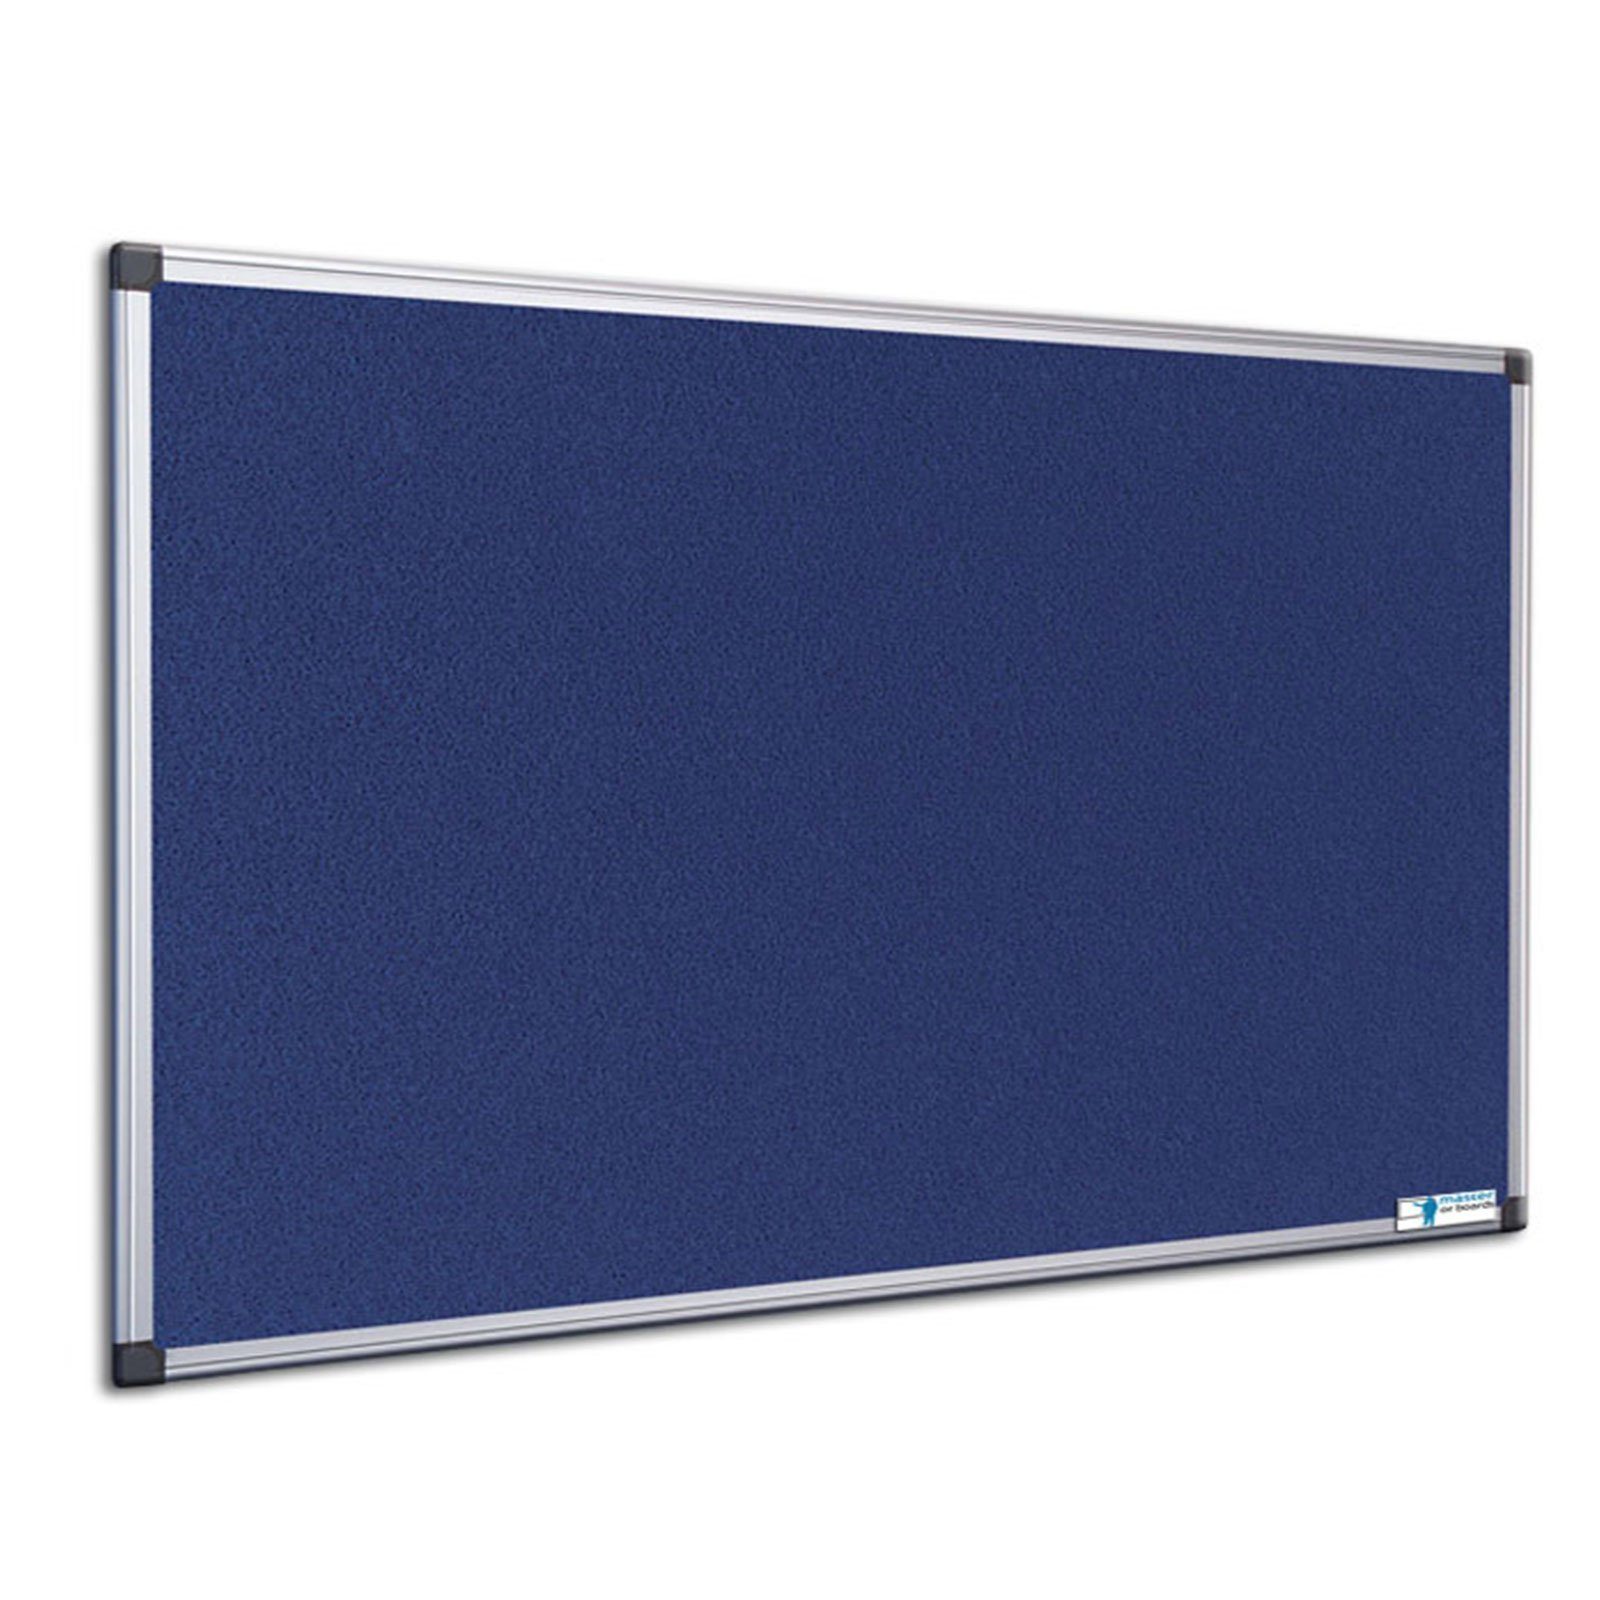 Karat Pinnwand Filz-Pinnwand mit Aluminium-Rahmen Blau, verschiedene Größen